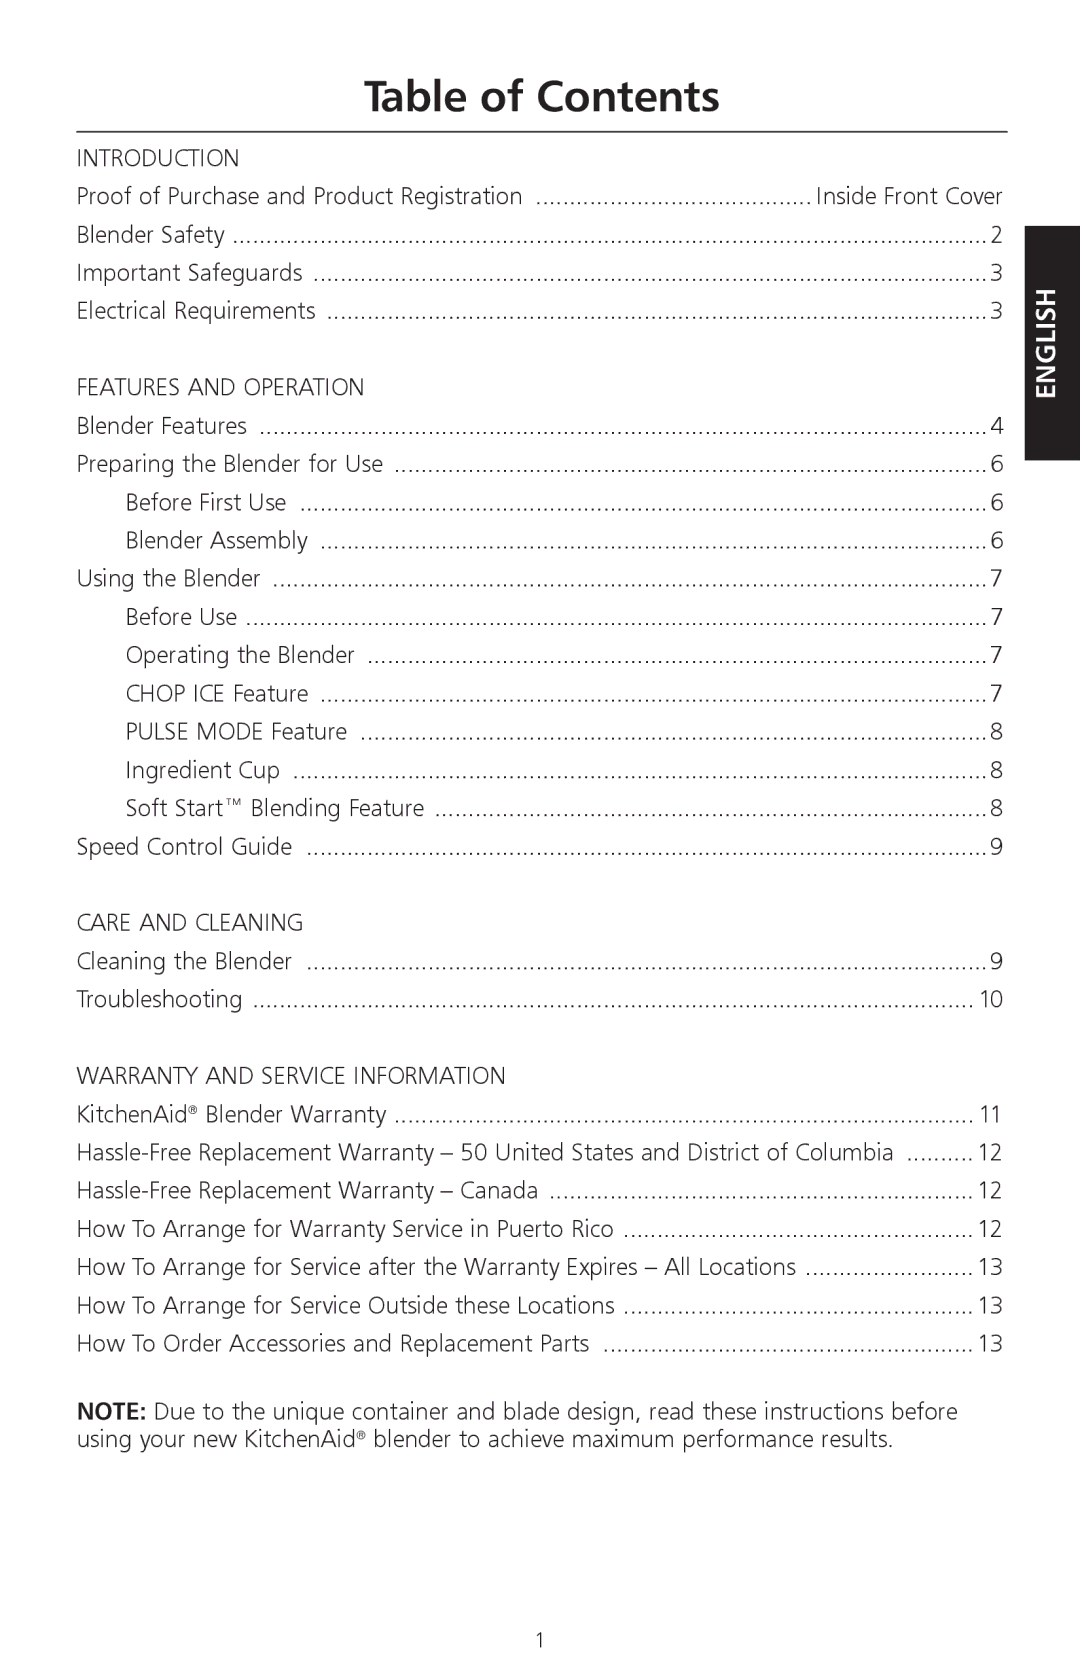 KitchenAid KSB465 manual Table of Contents 